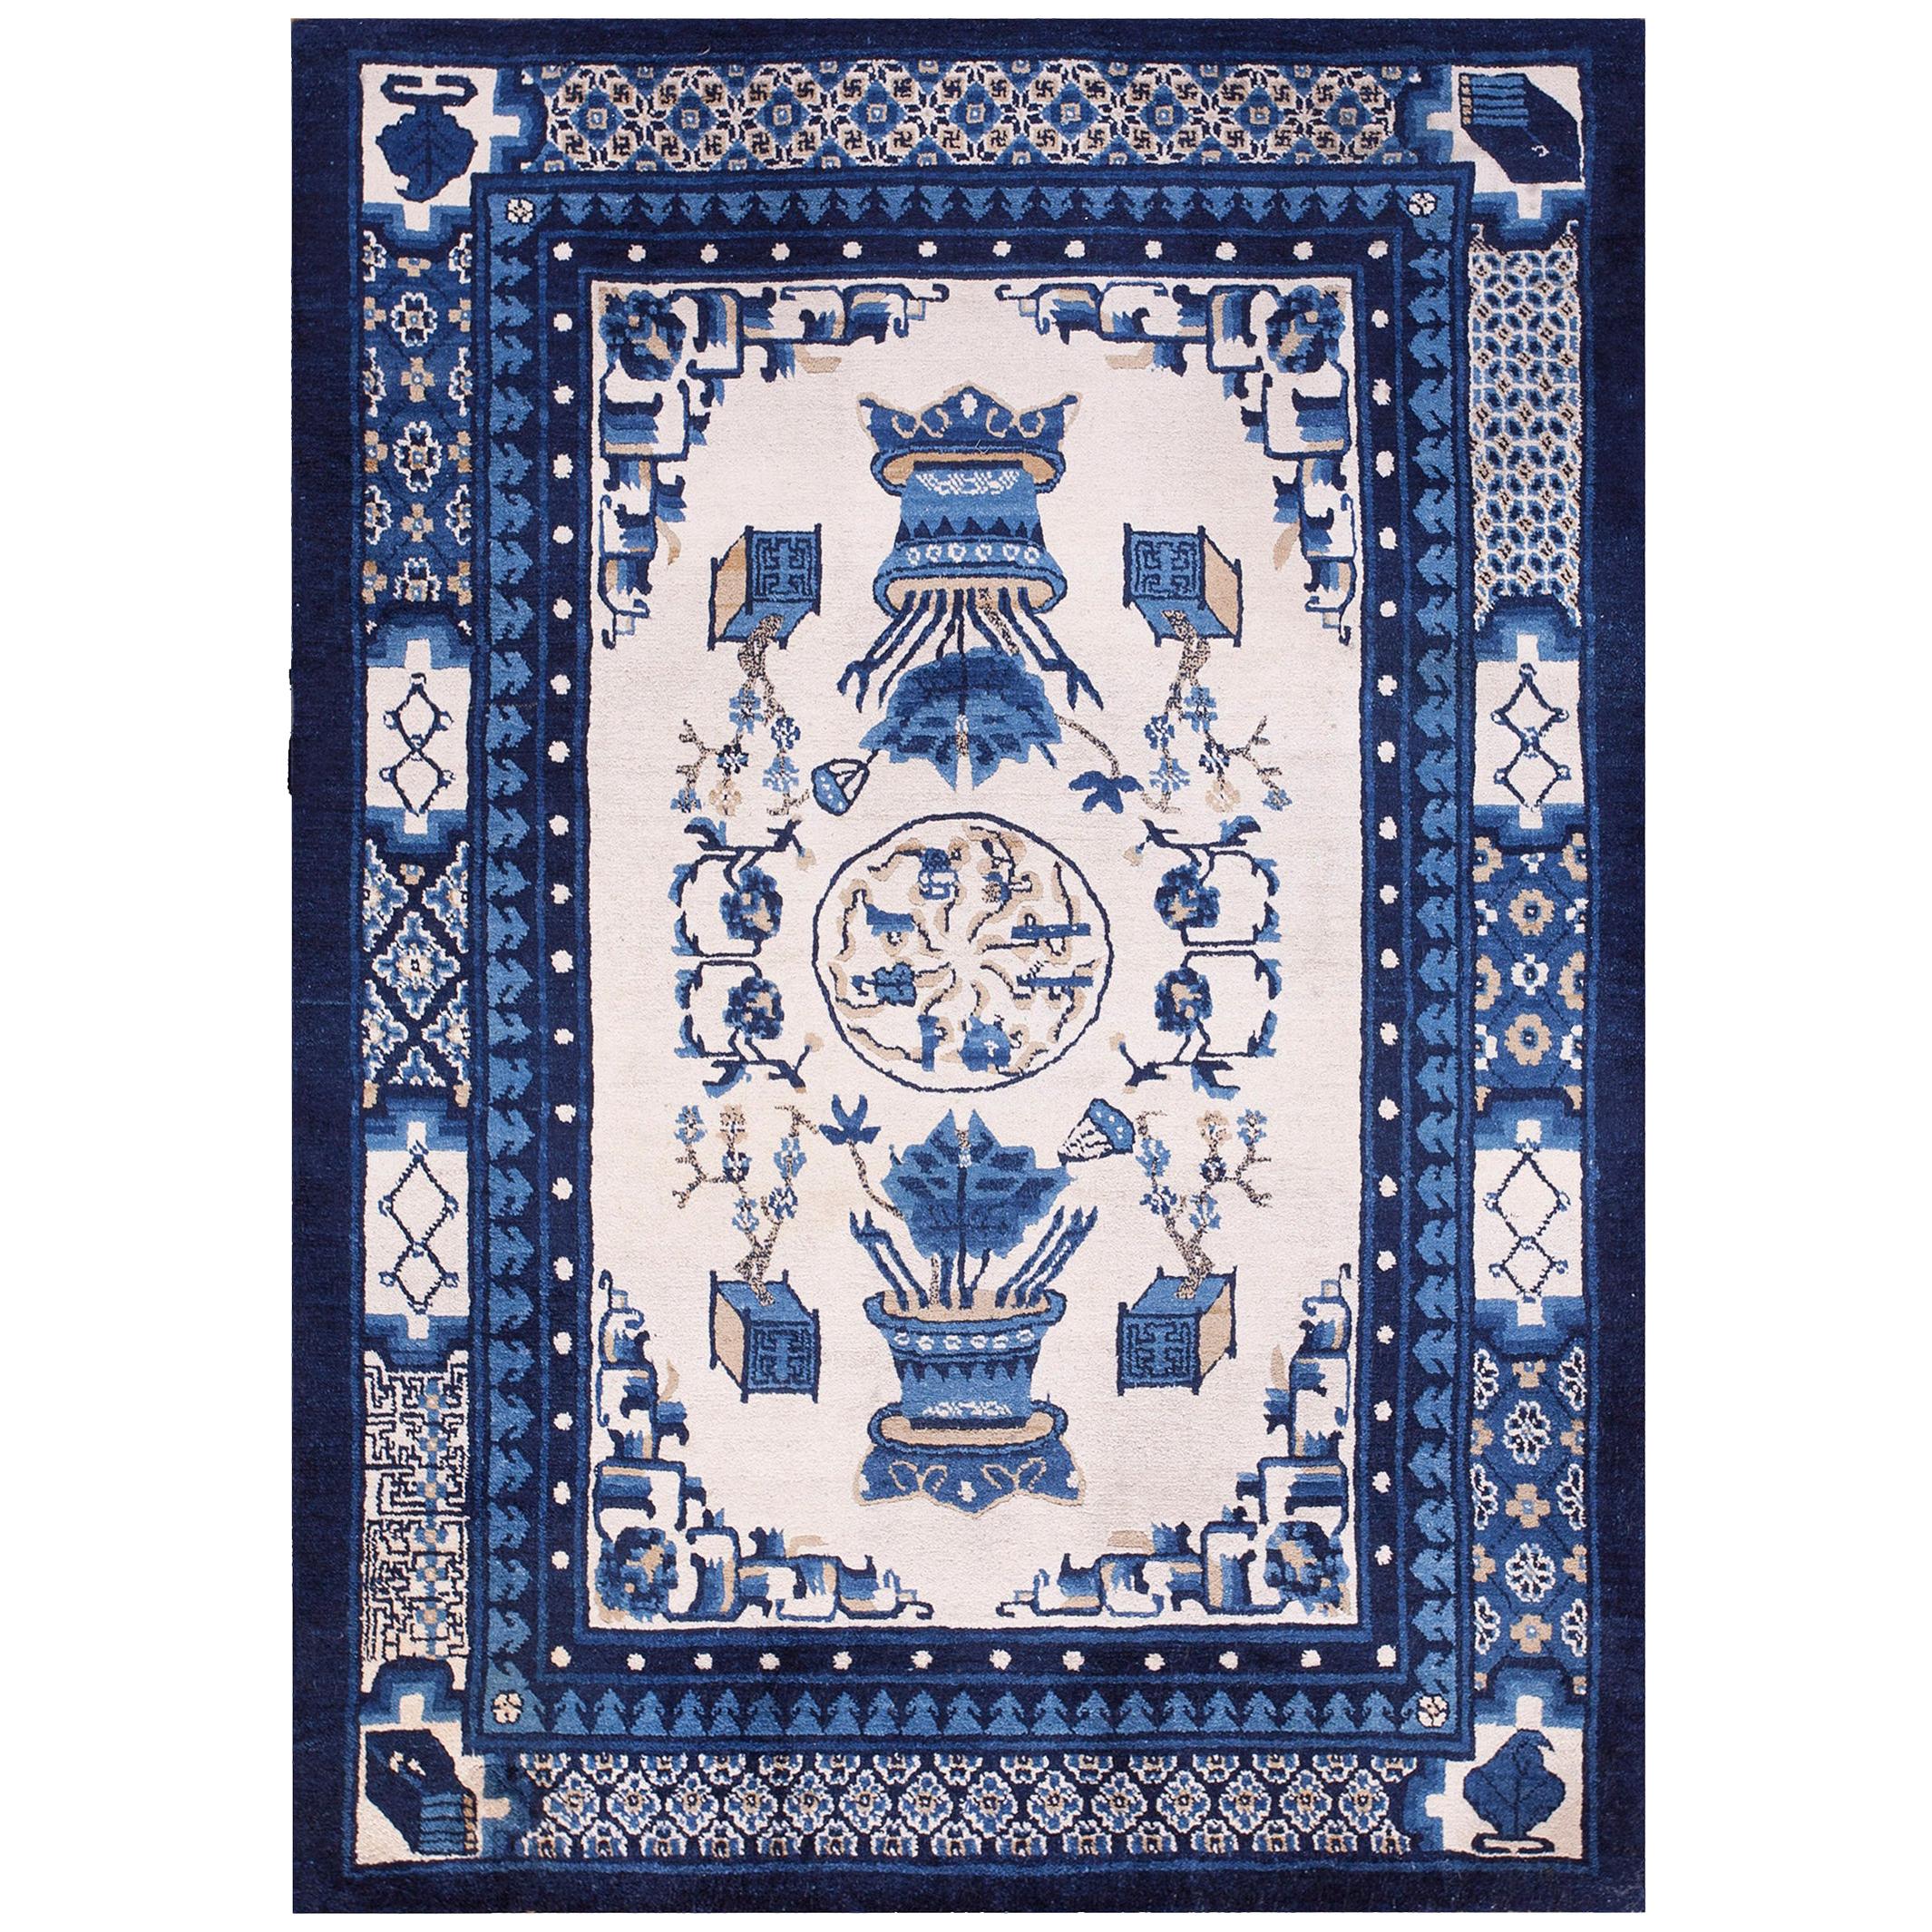 Early 20th Century N. Chinese Mongolian Carpet ( 4'3" x 5'10" - 130 x 178 )